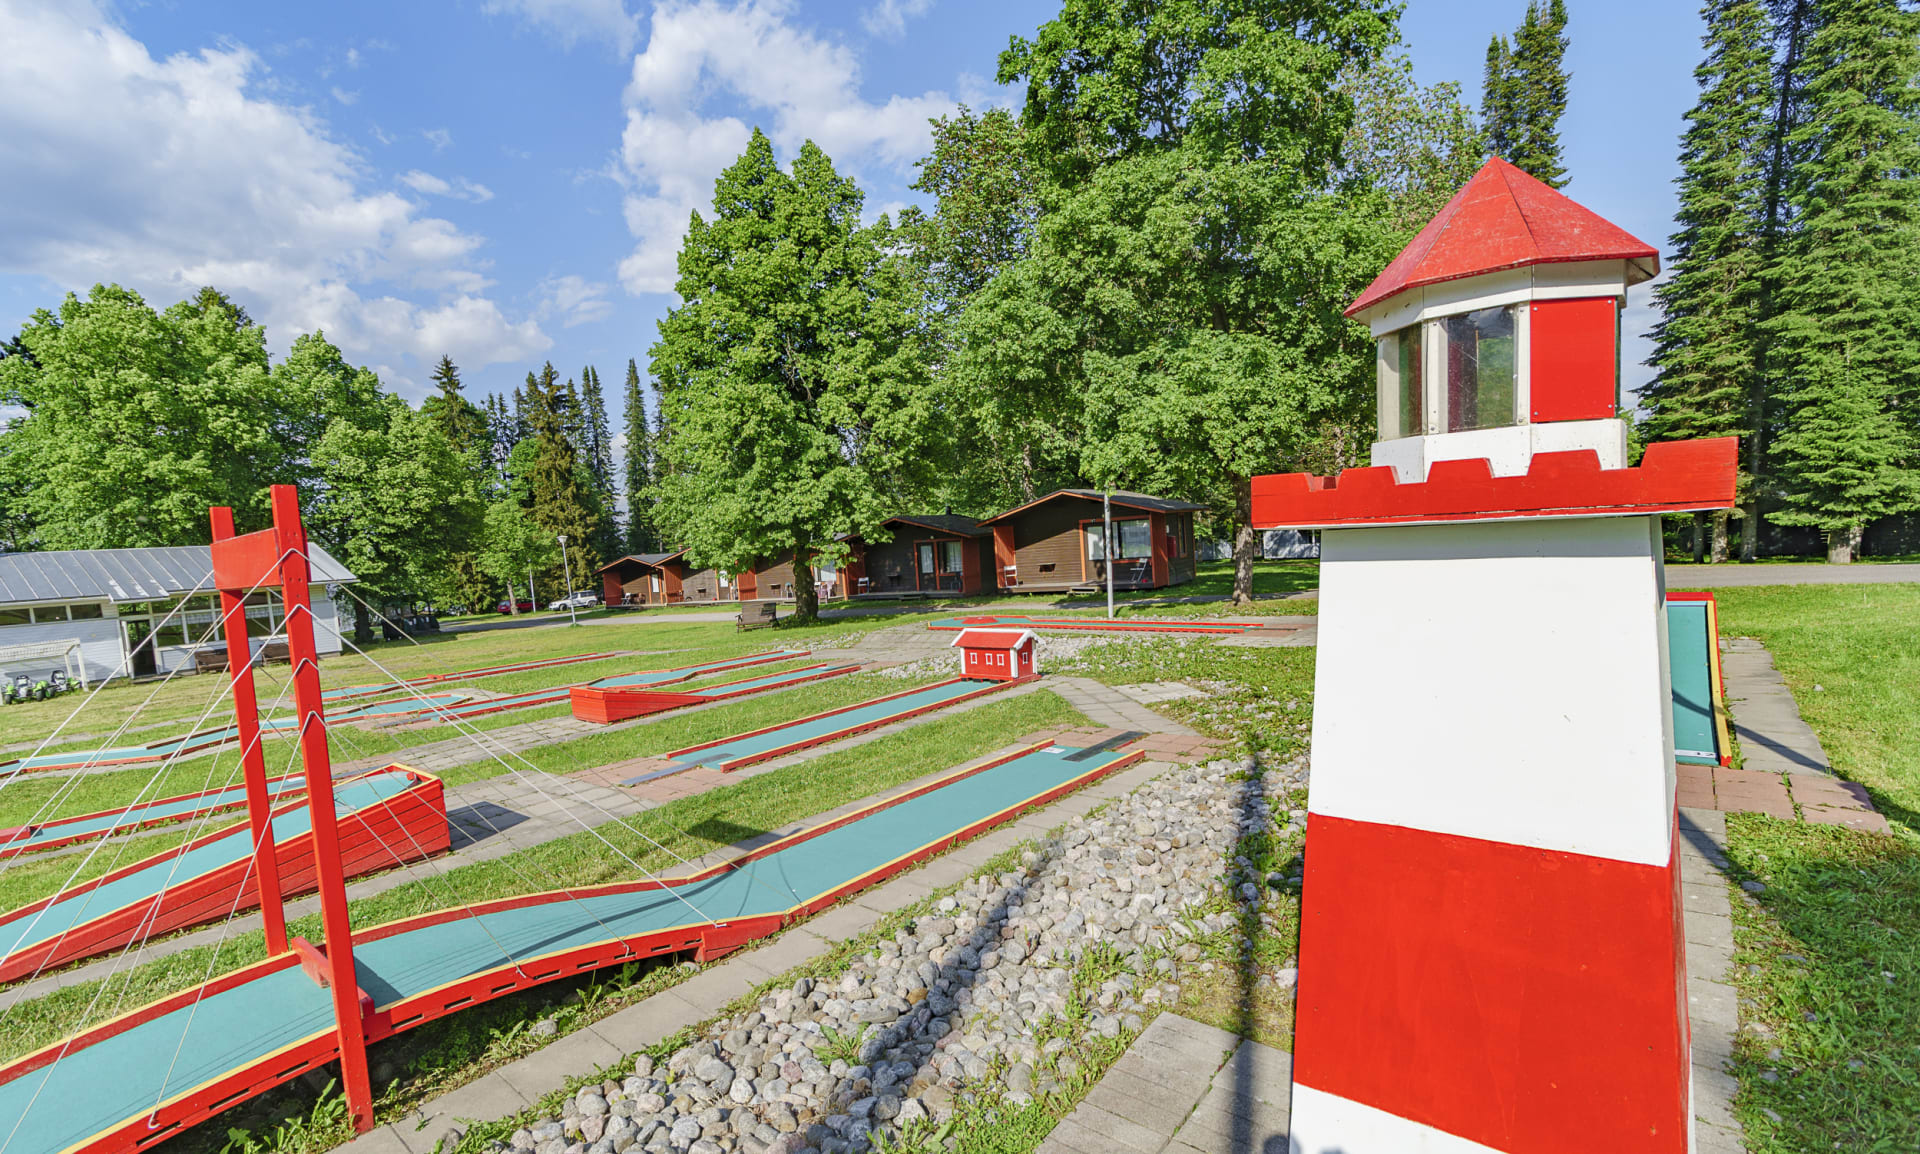 Minigolf is popular game at Härmälä Camping.